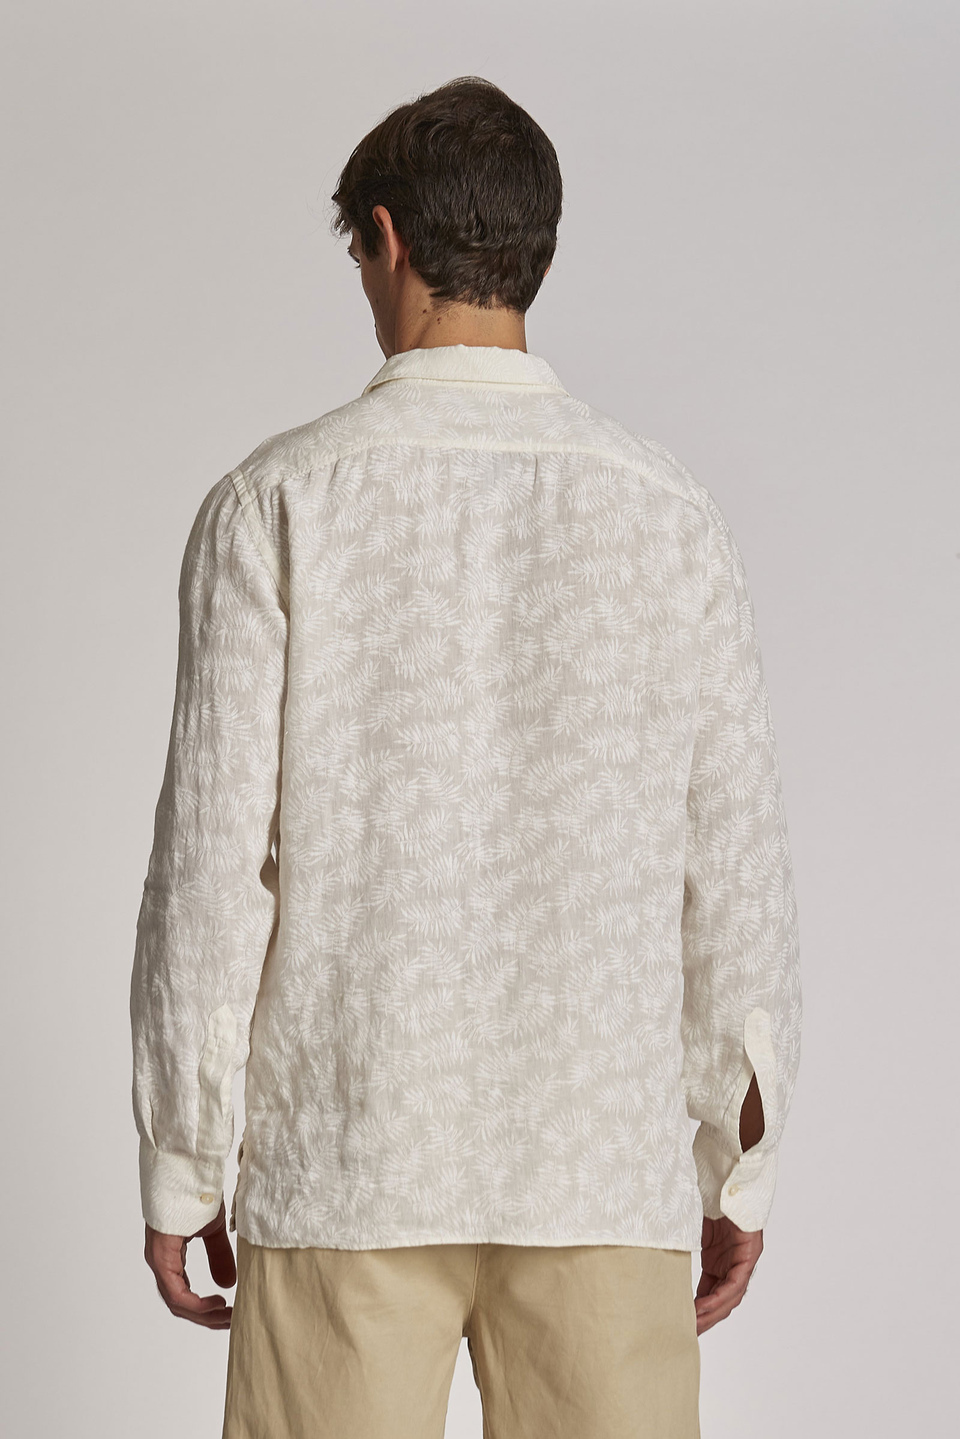 Men's long-sleeved regular-fit linen shirt | La Martina - Official Online Shop